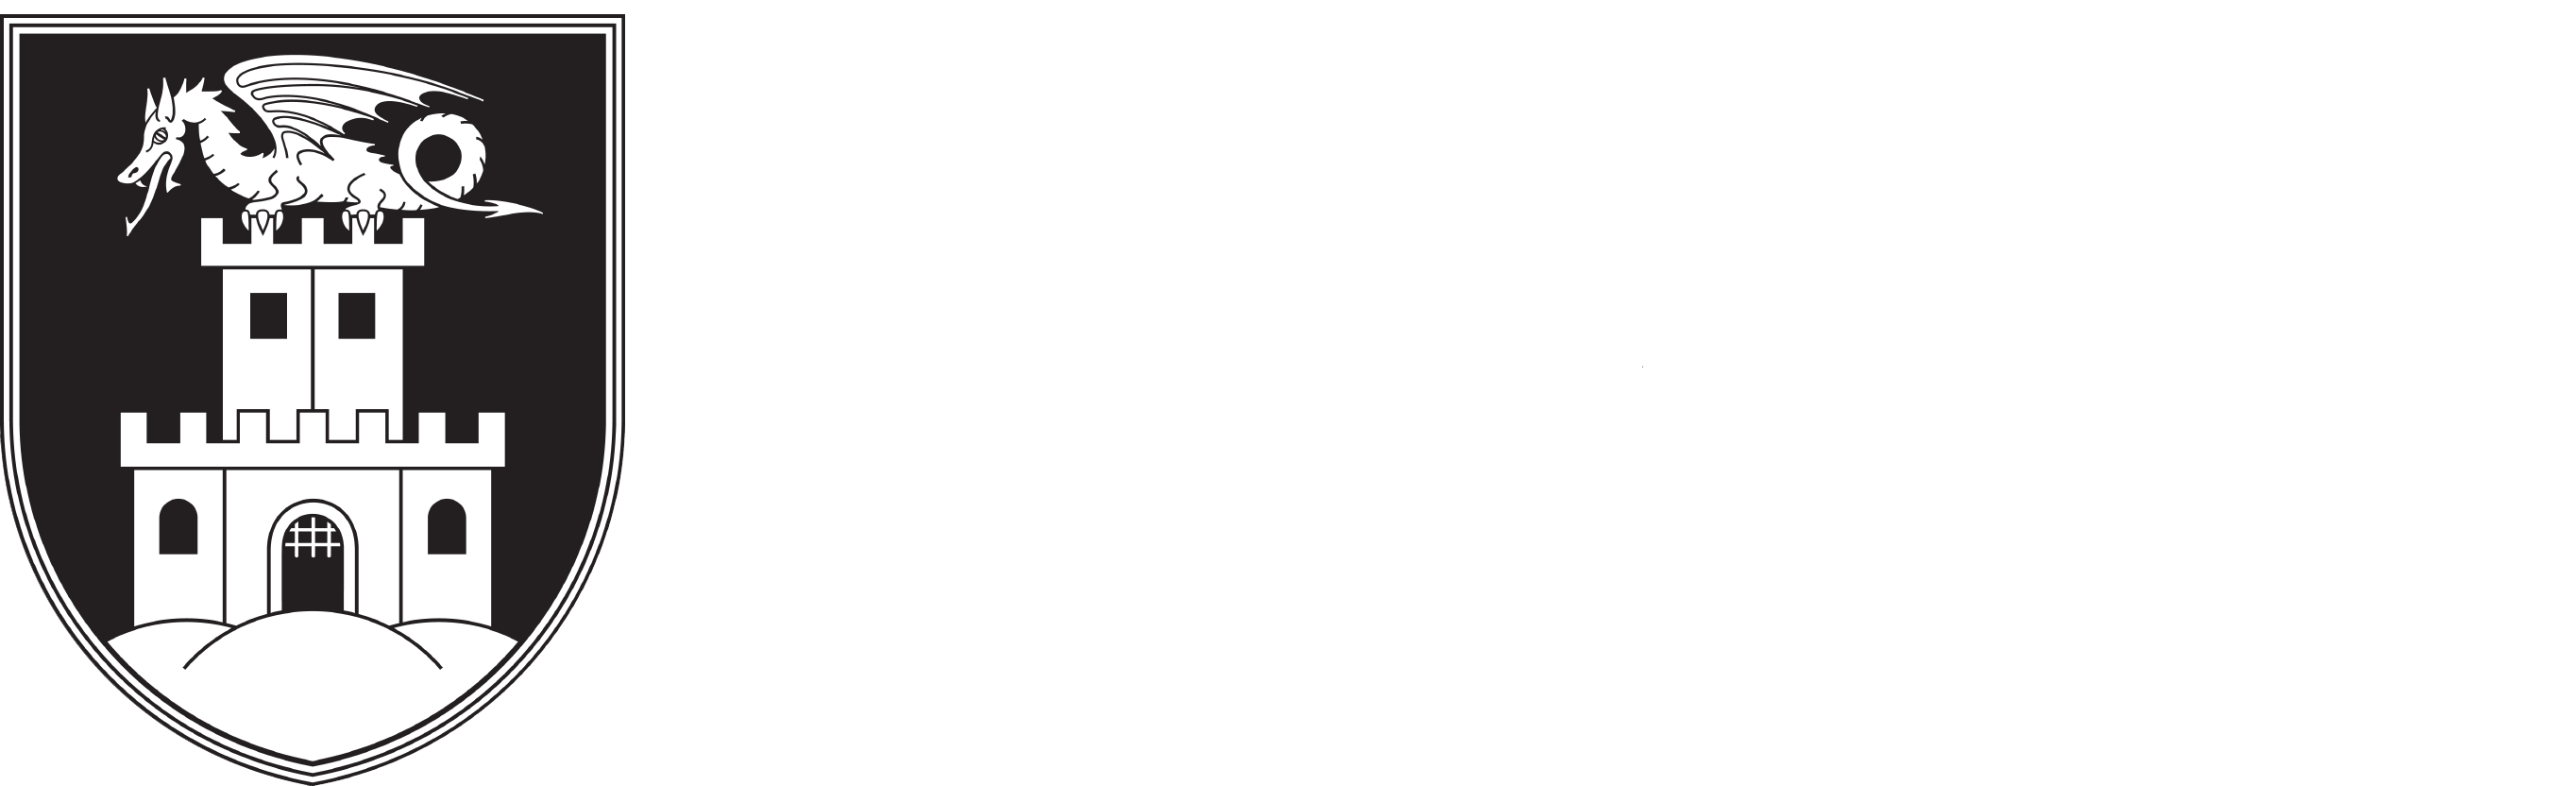 Grb MOL s slovenskim napisom (ležeči)_bel.png